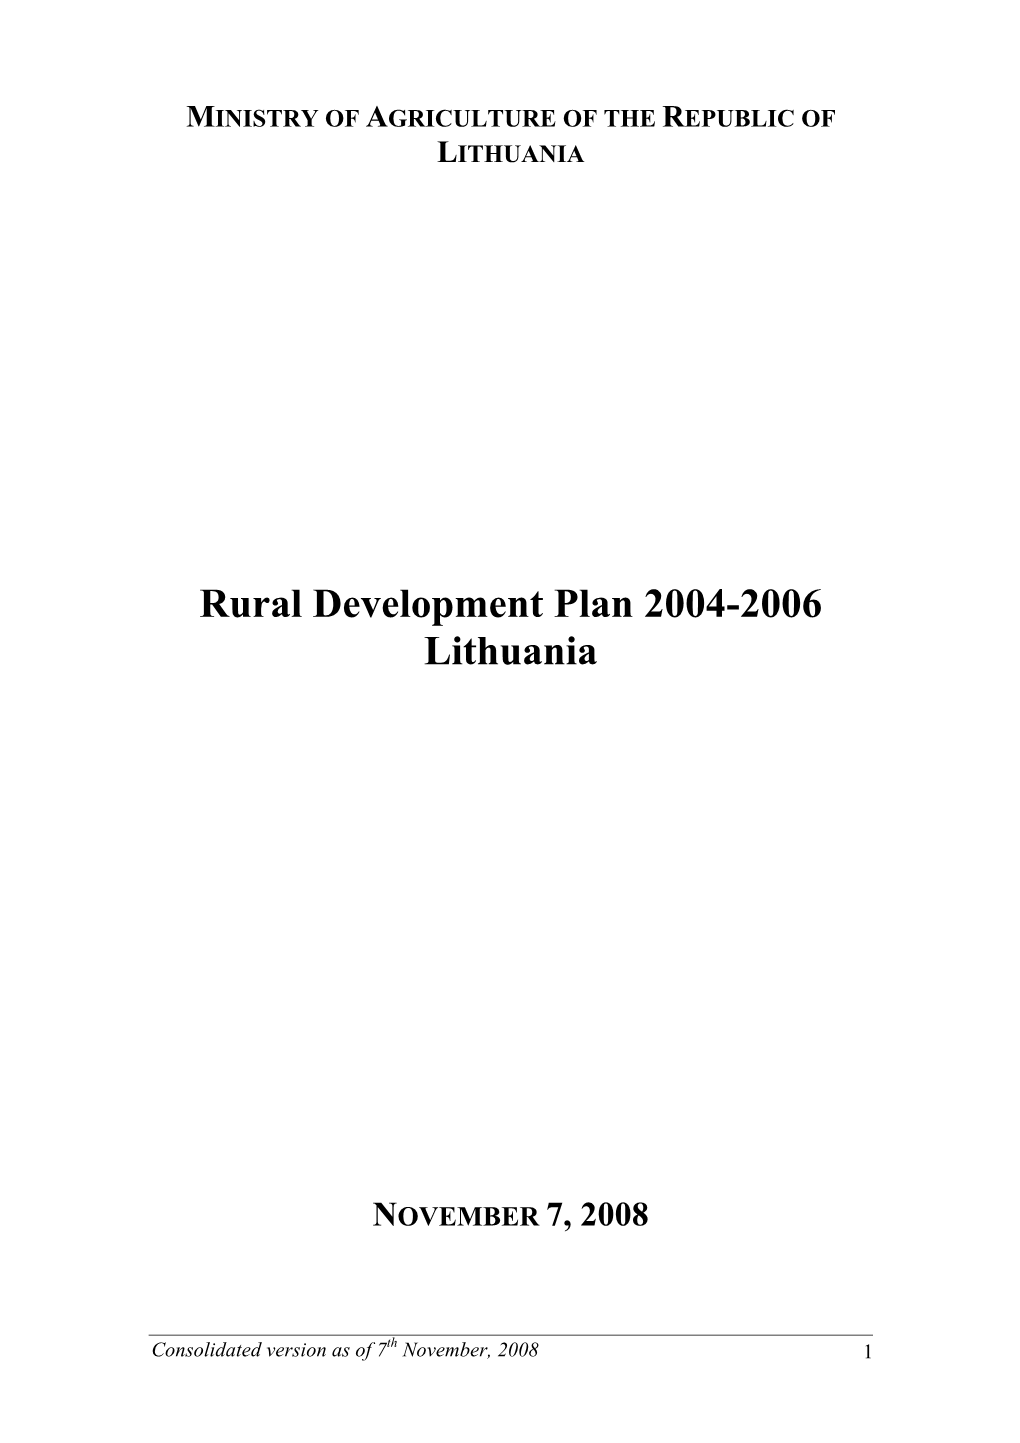 Rural Development Plan 2004-2006 Lithuania